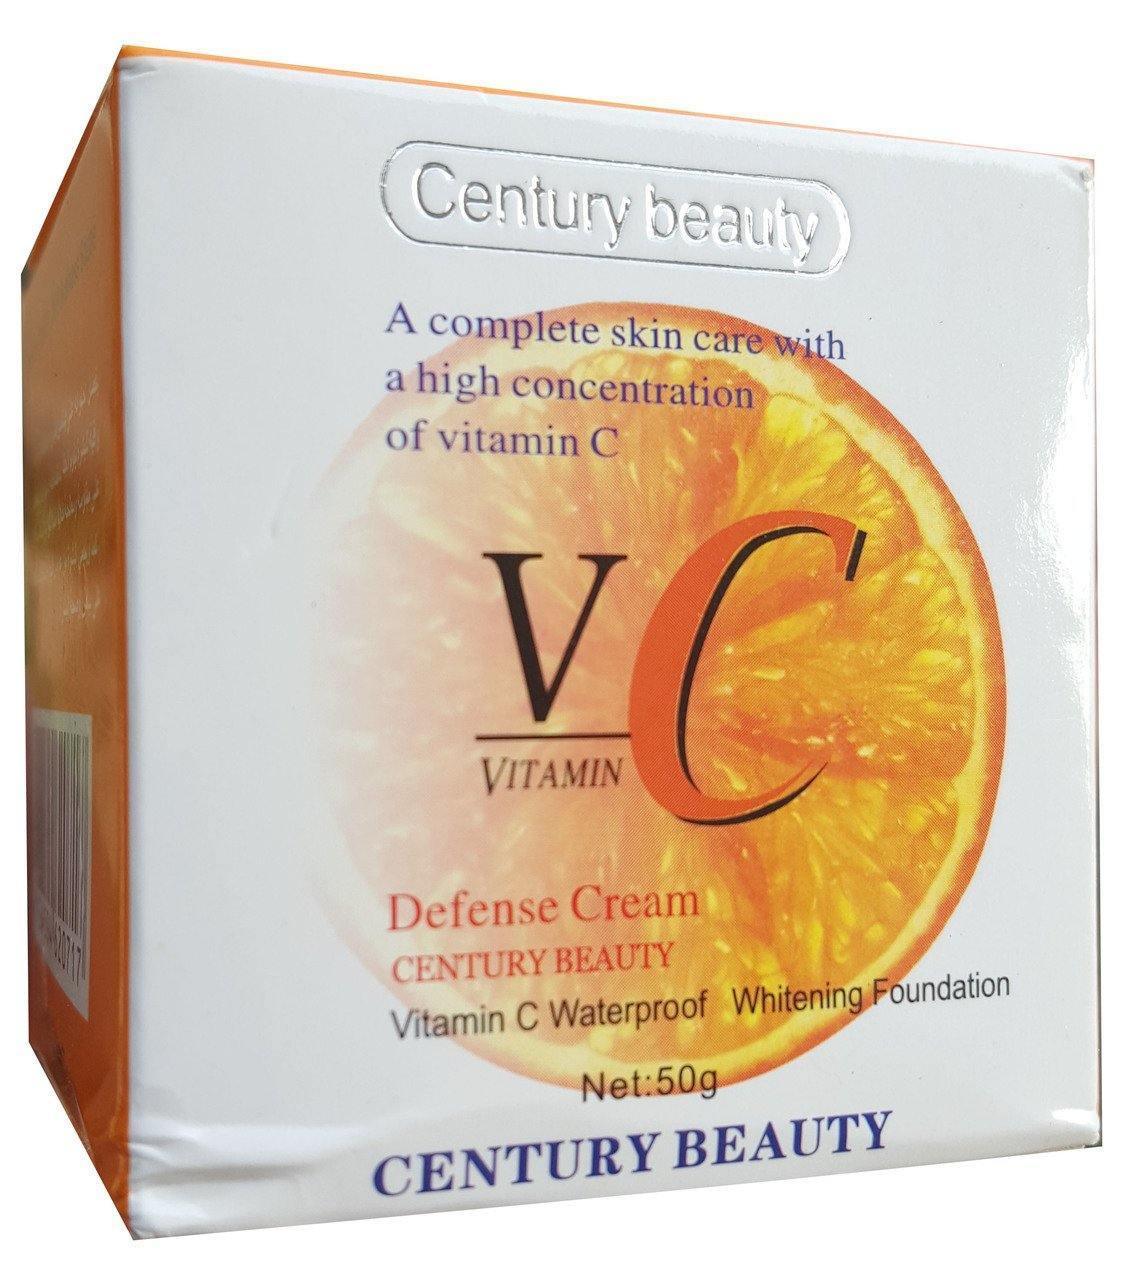 Century Beauty Vitamin C VC Waterproof Whitening Foundation 50g – Imported